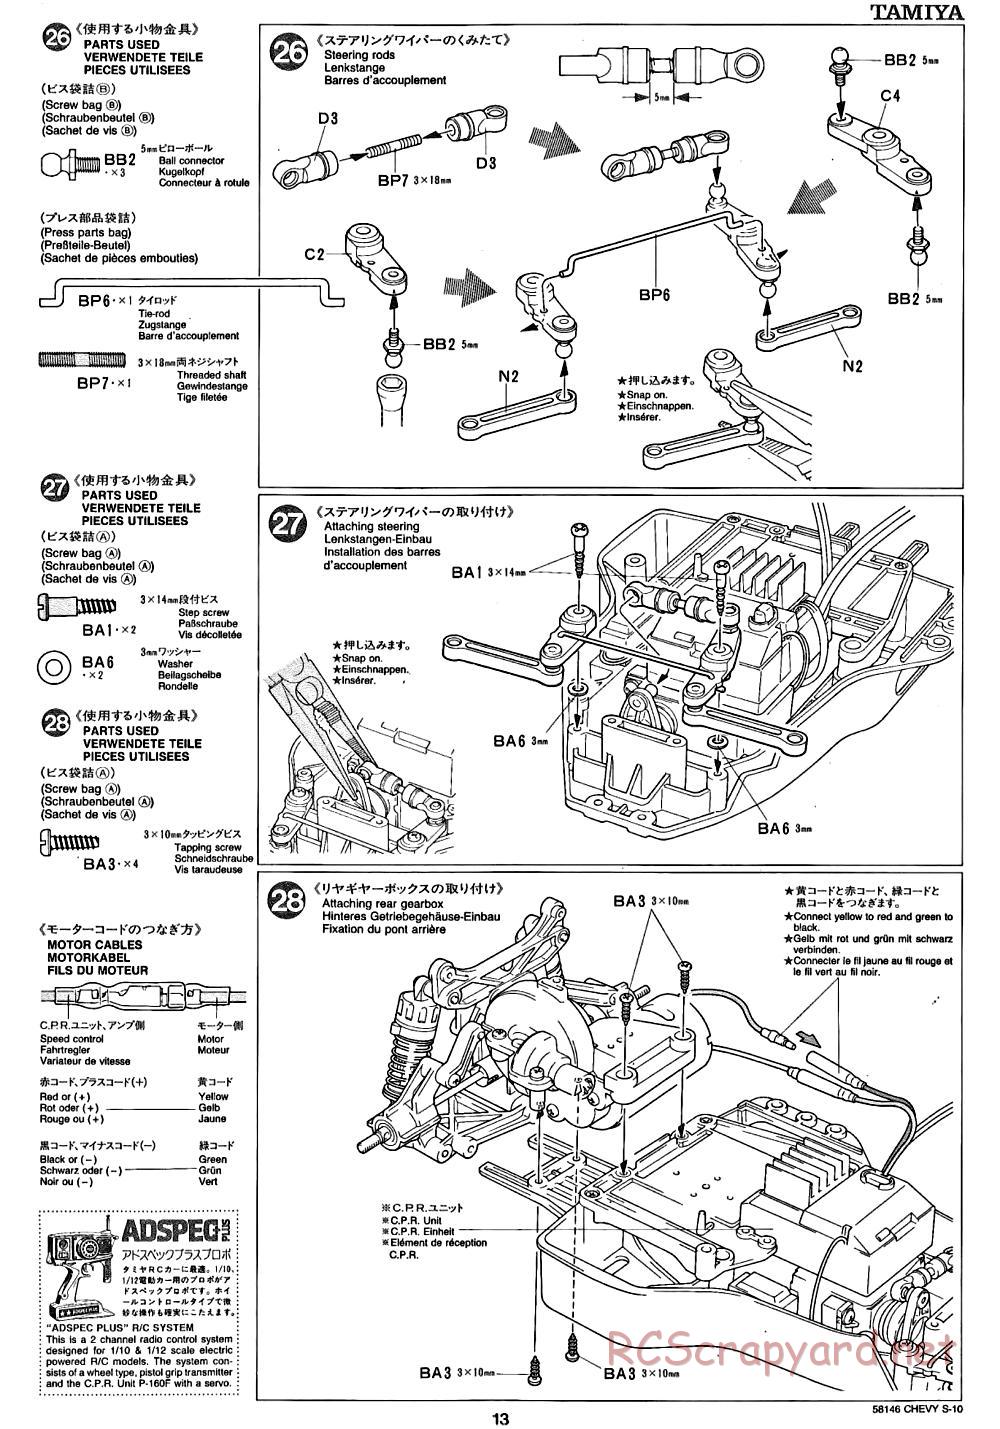 Tamiya - Chevy S-10 Chassis - Manual - Page 13